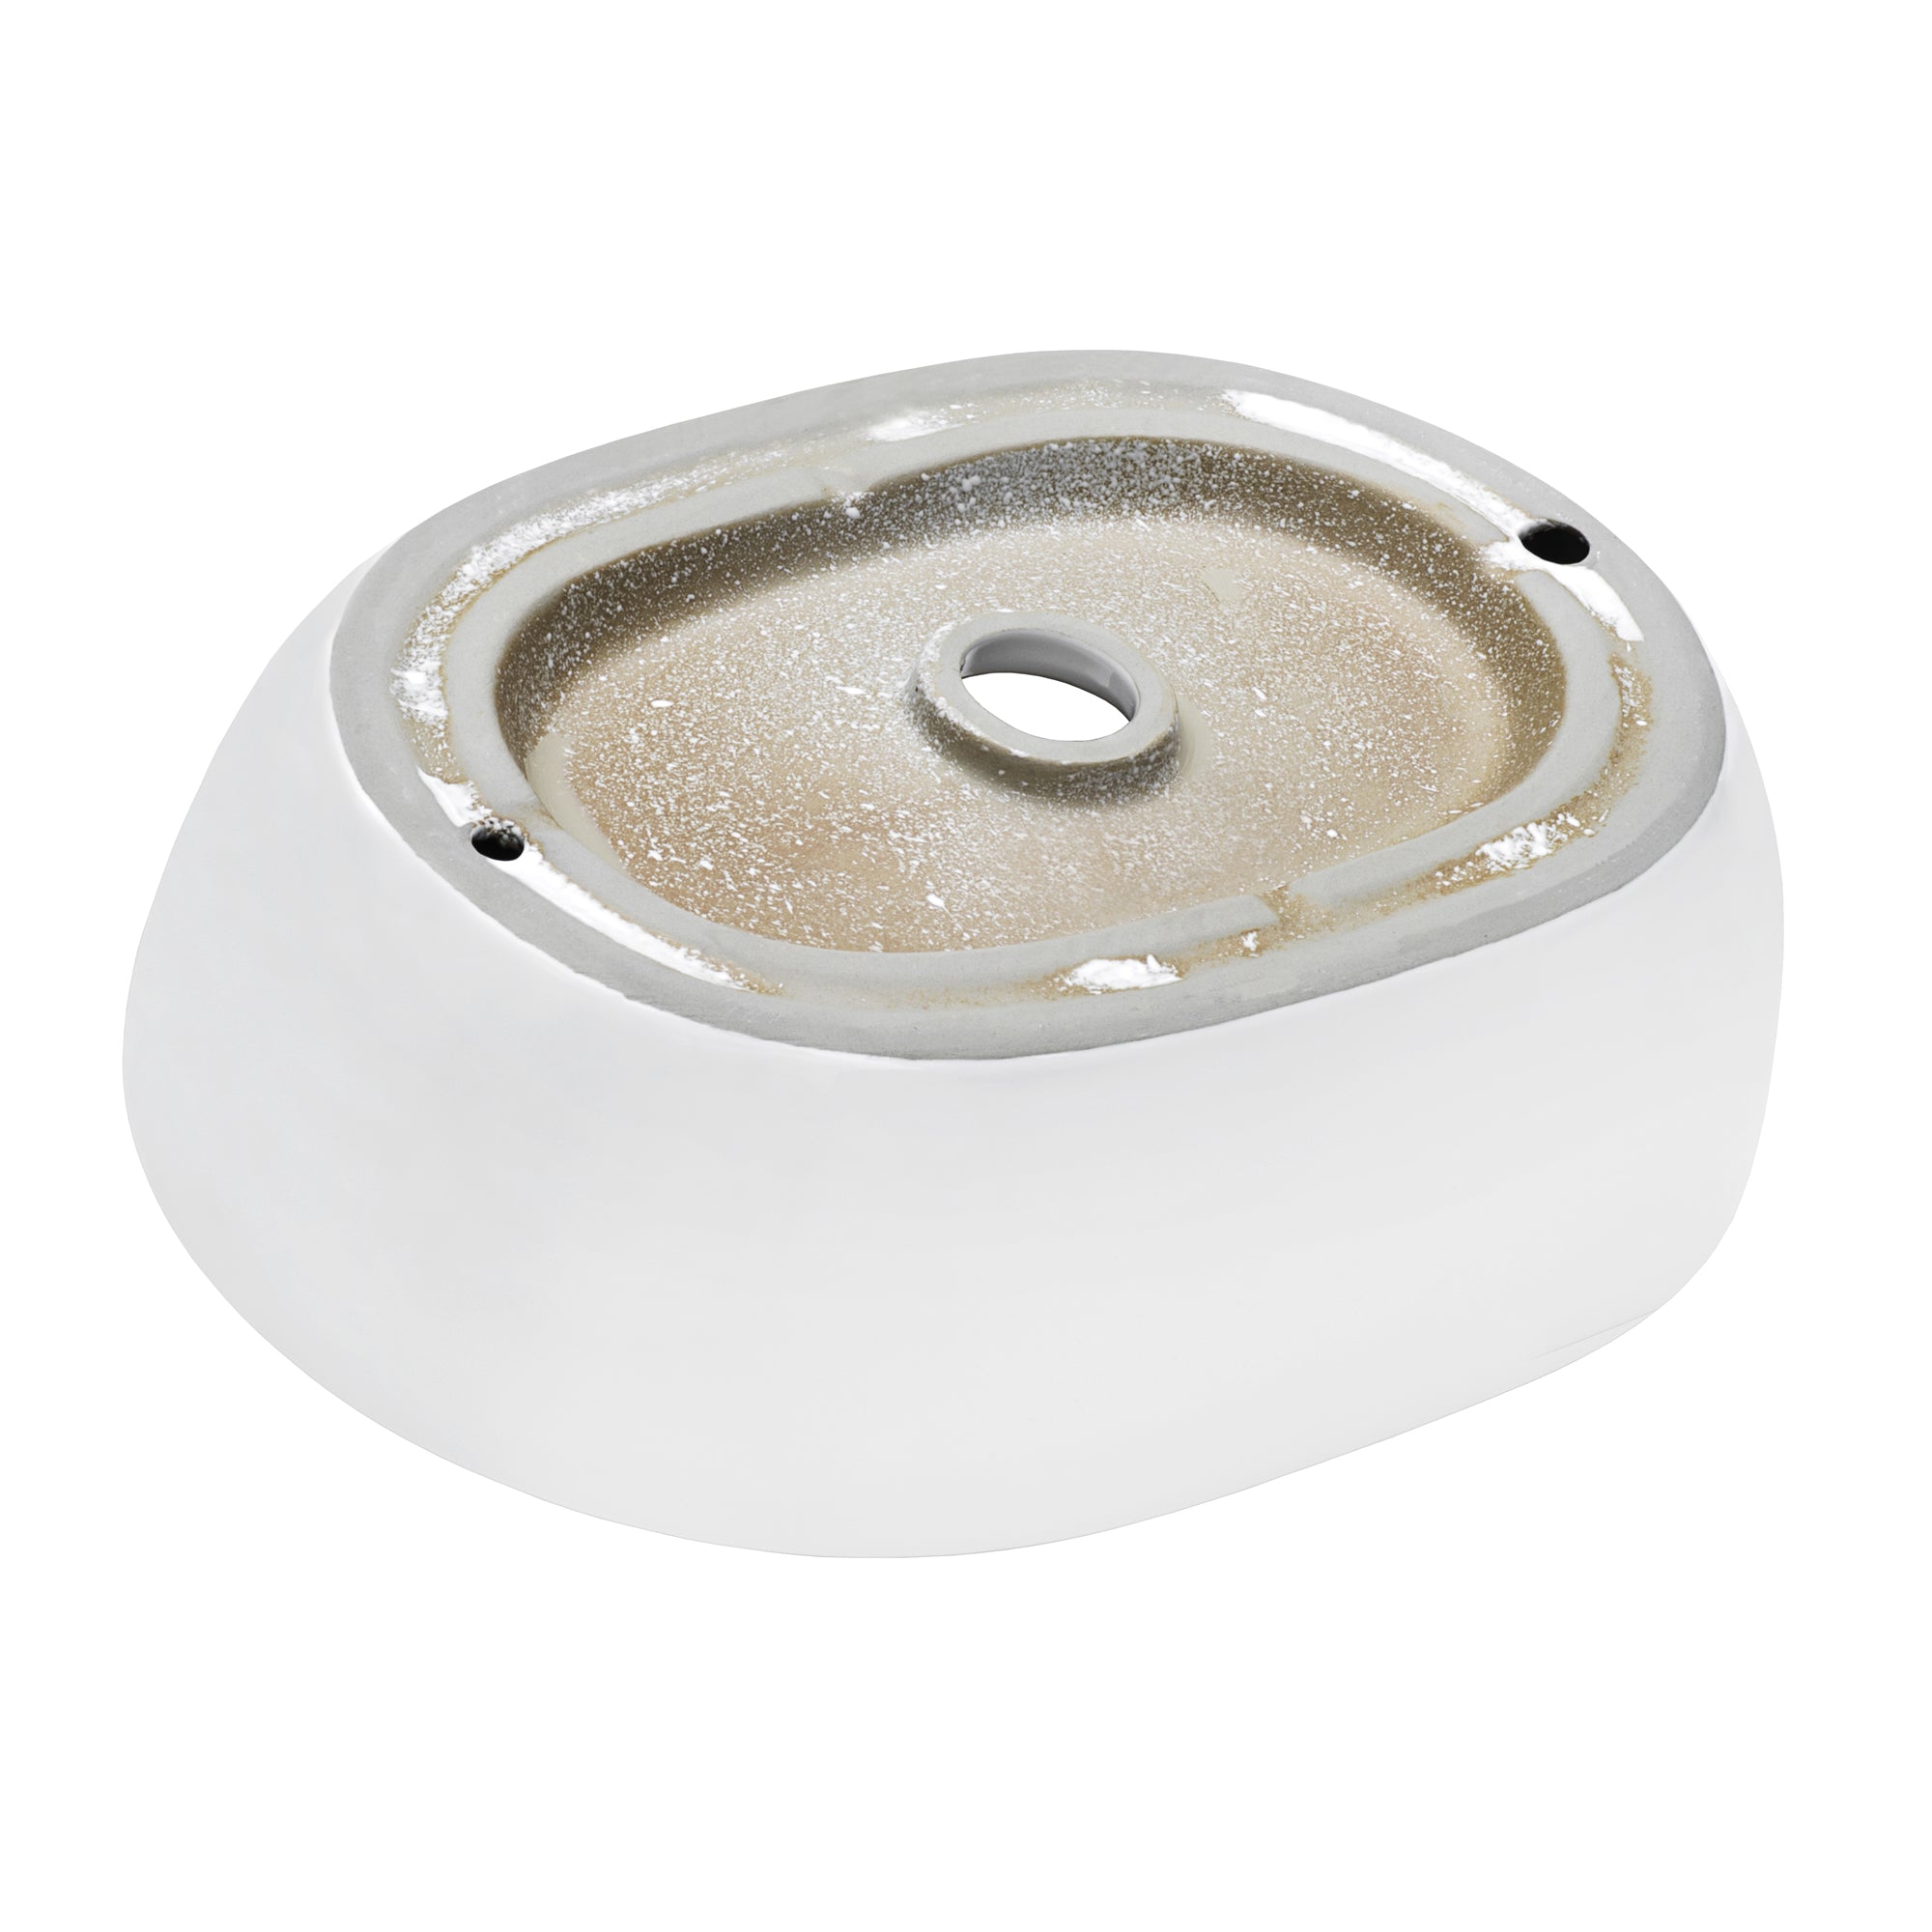 19 x 14 inch Bathroom Vessel Sink White Oval Above Counter Vanity Porcelain Ceramic